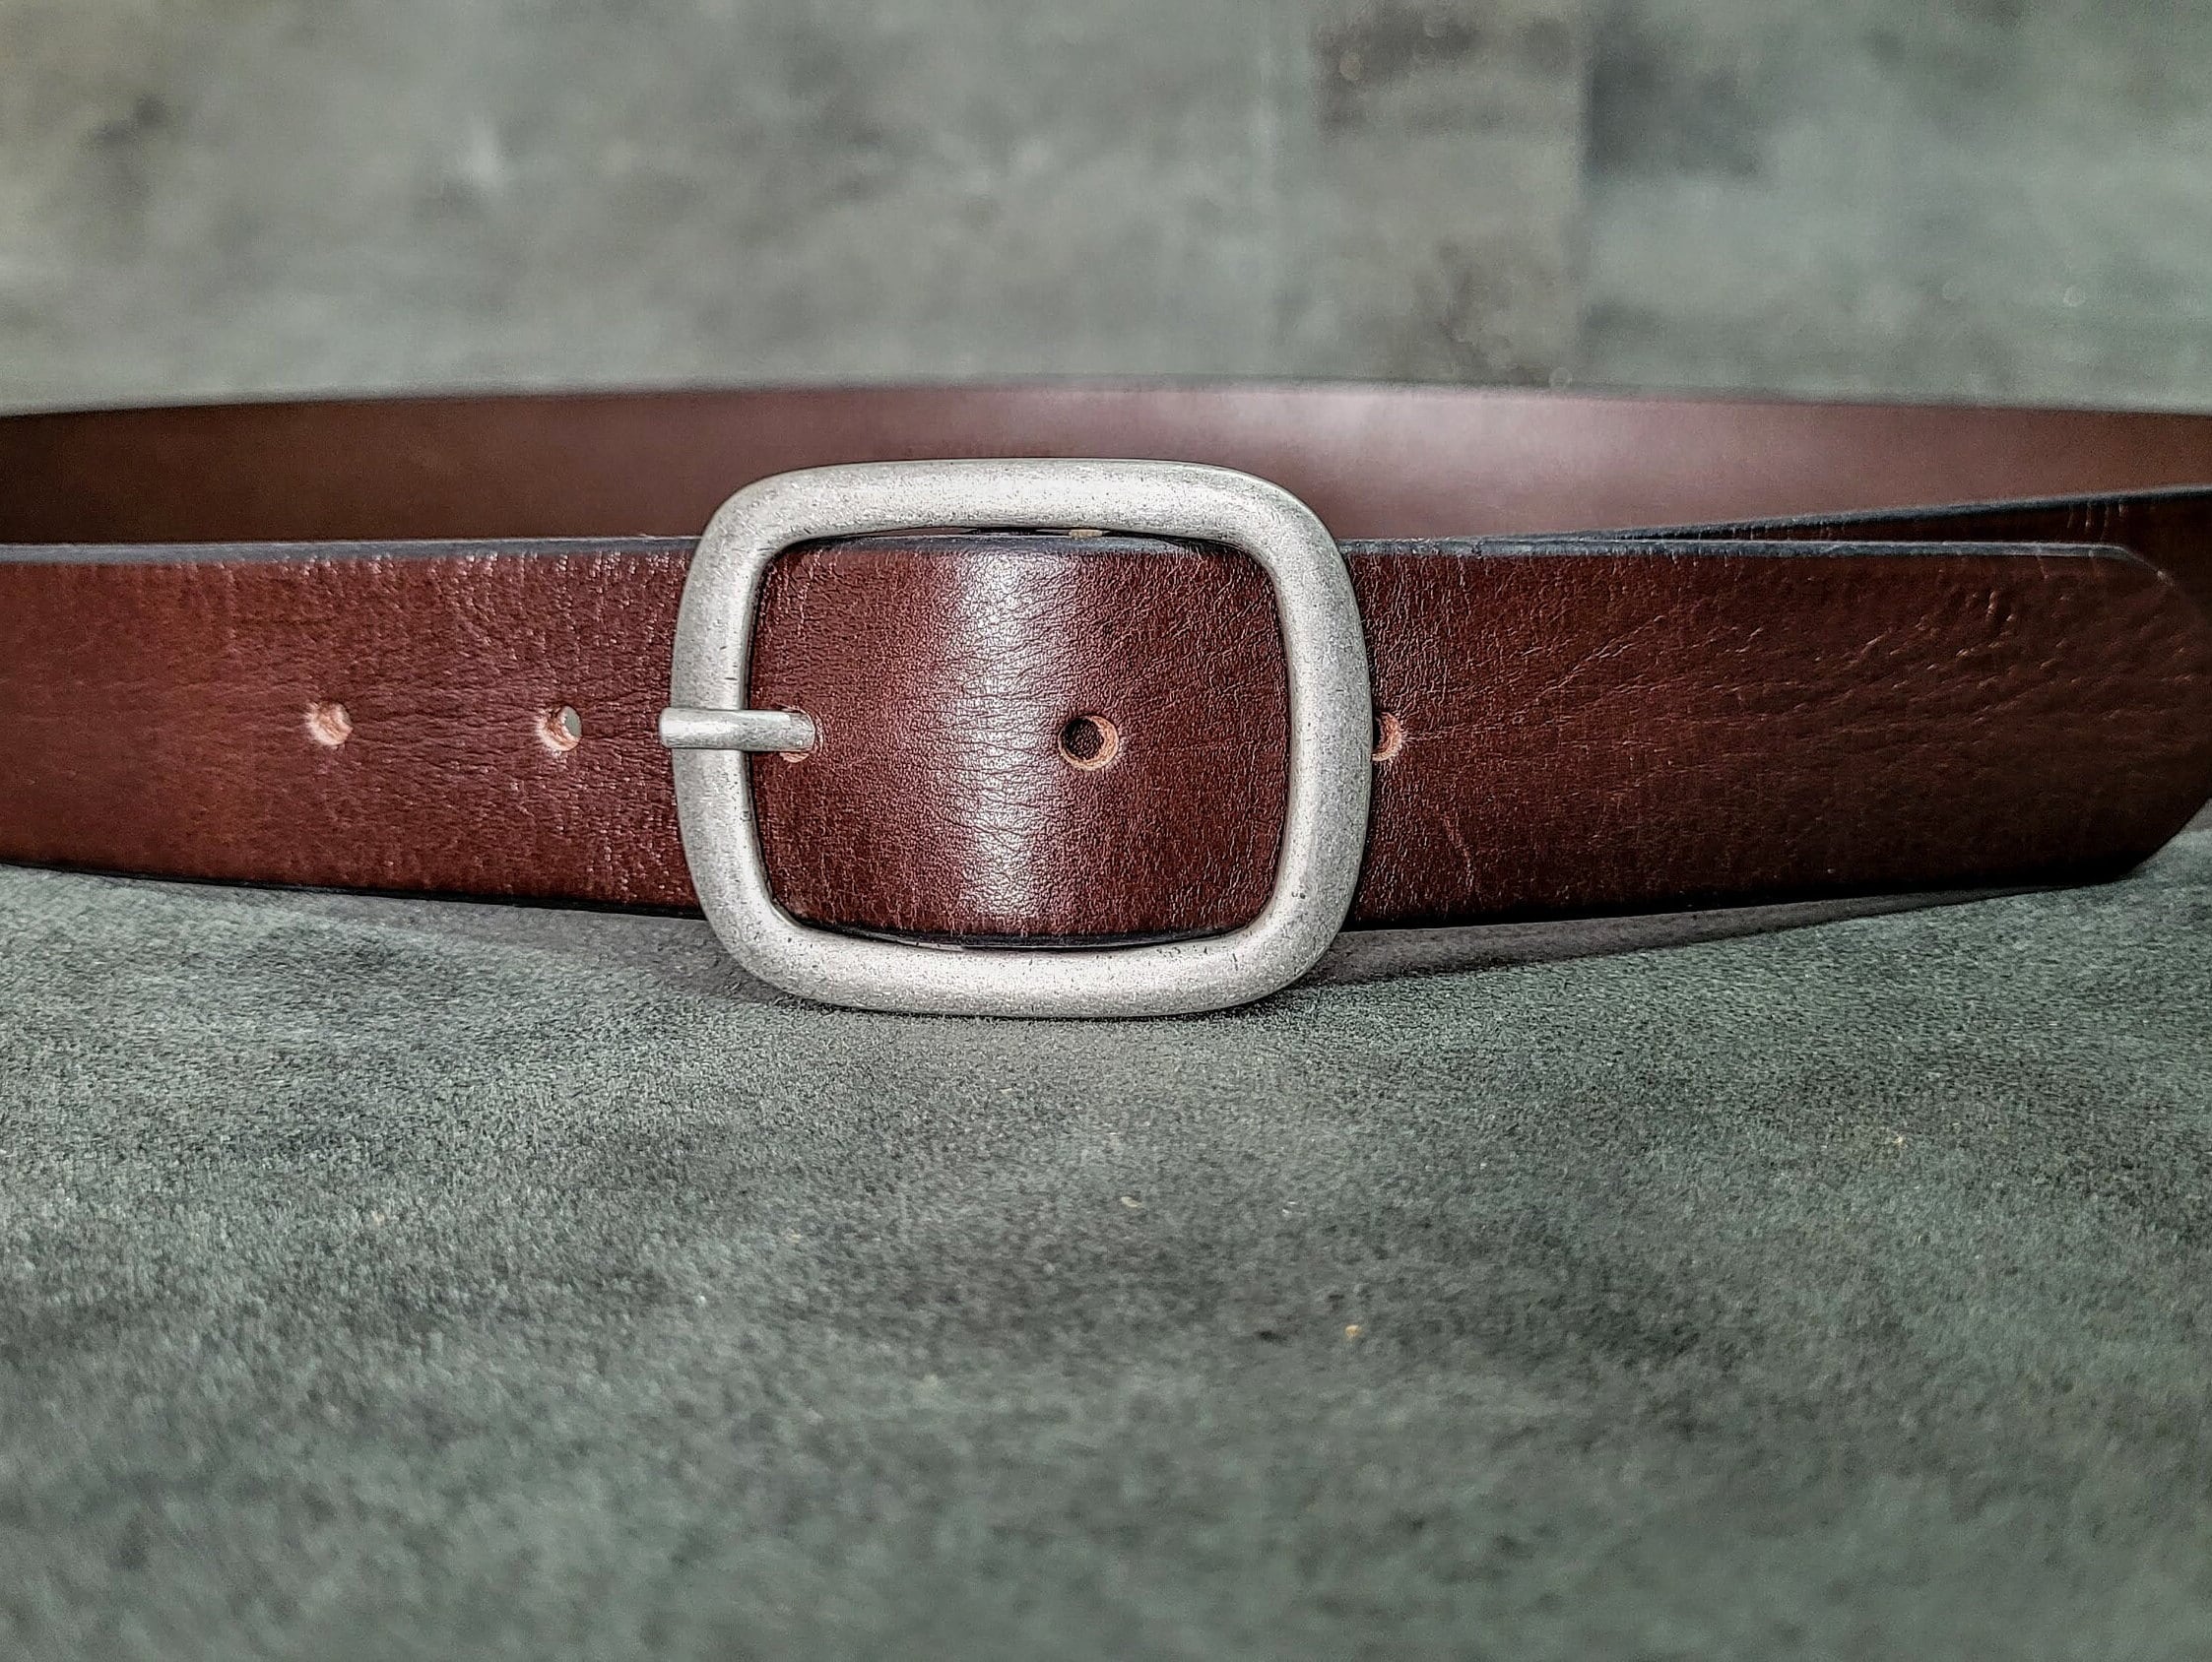 Braid Leather Belt Handcrafted Full Grain Black Braided Belts Elegant  Trendy for Men's and Women Belt for Your Love, Real Woven Leather Belt 